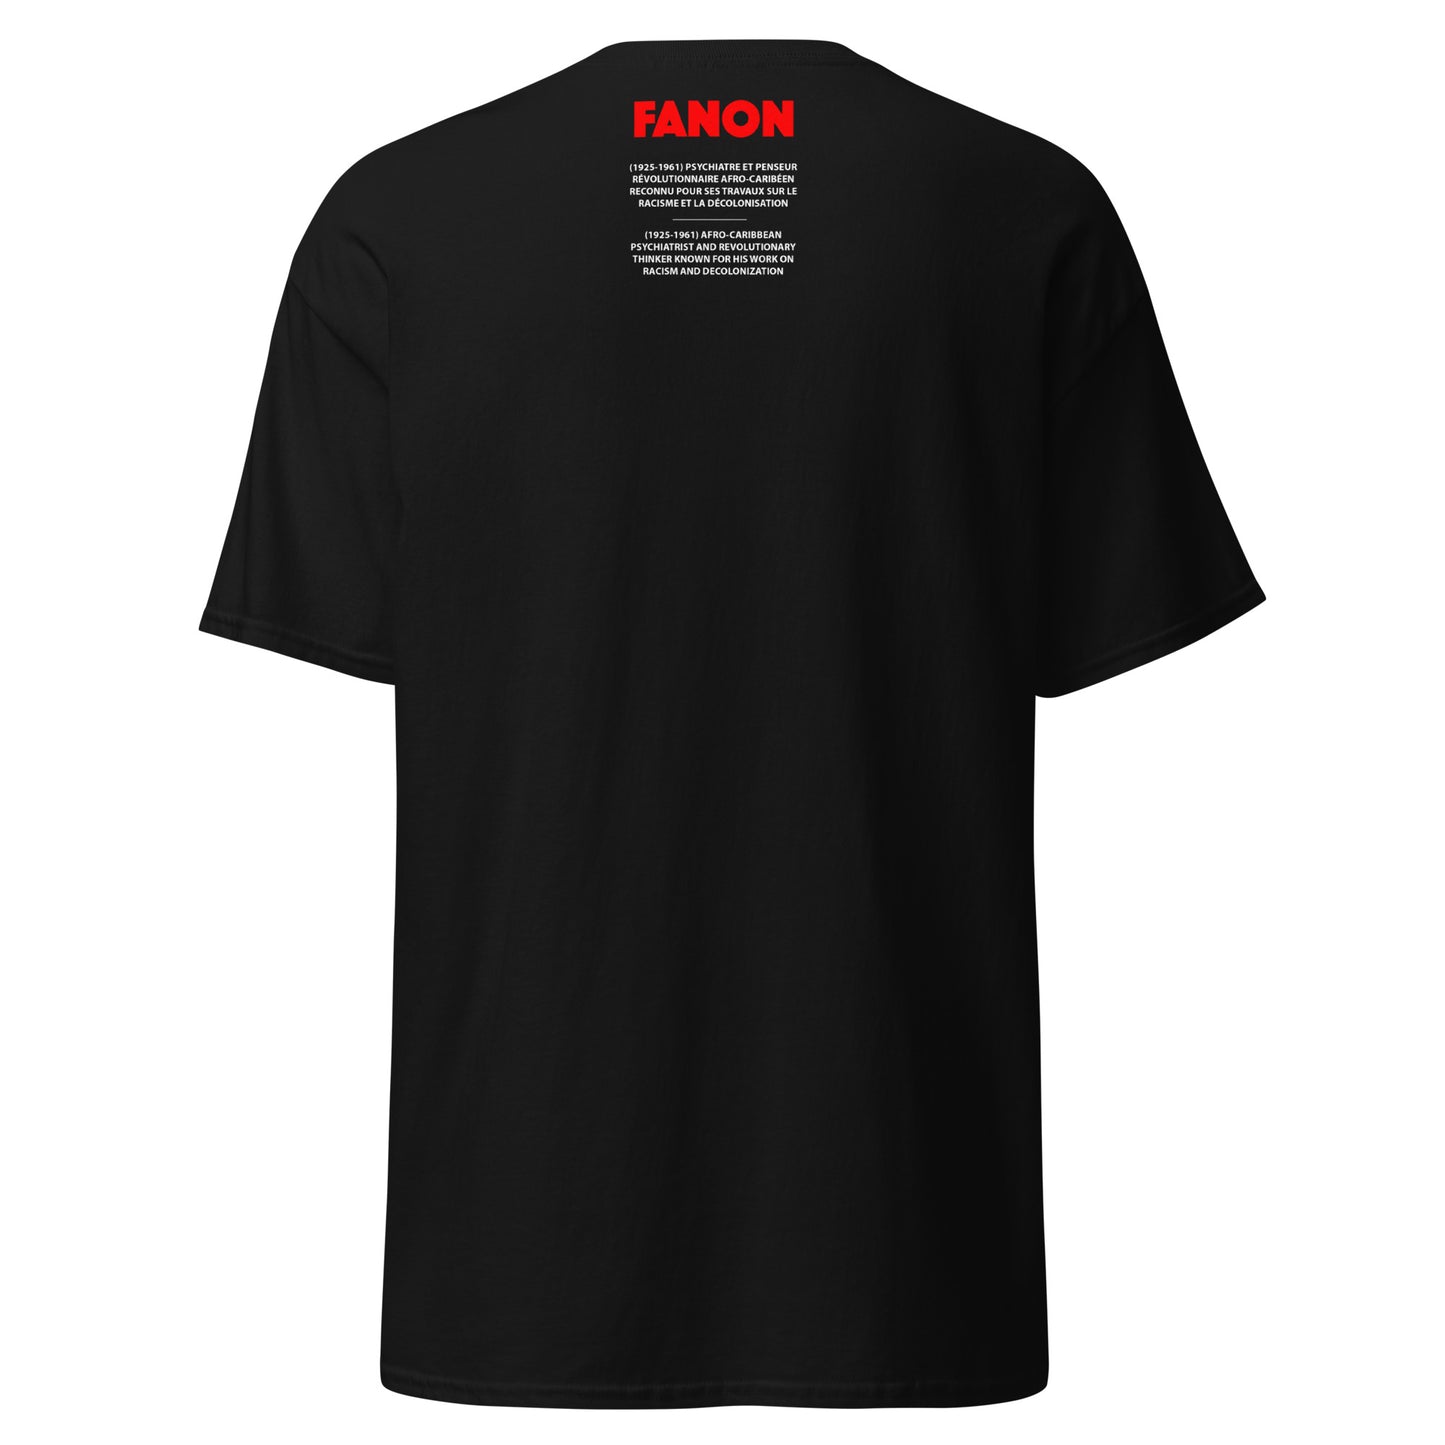 FANON (T-shirt)